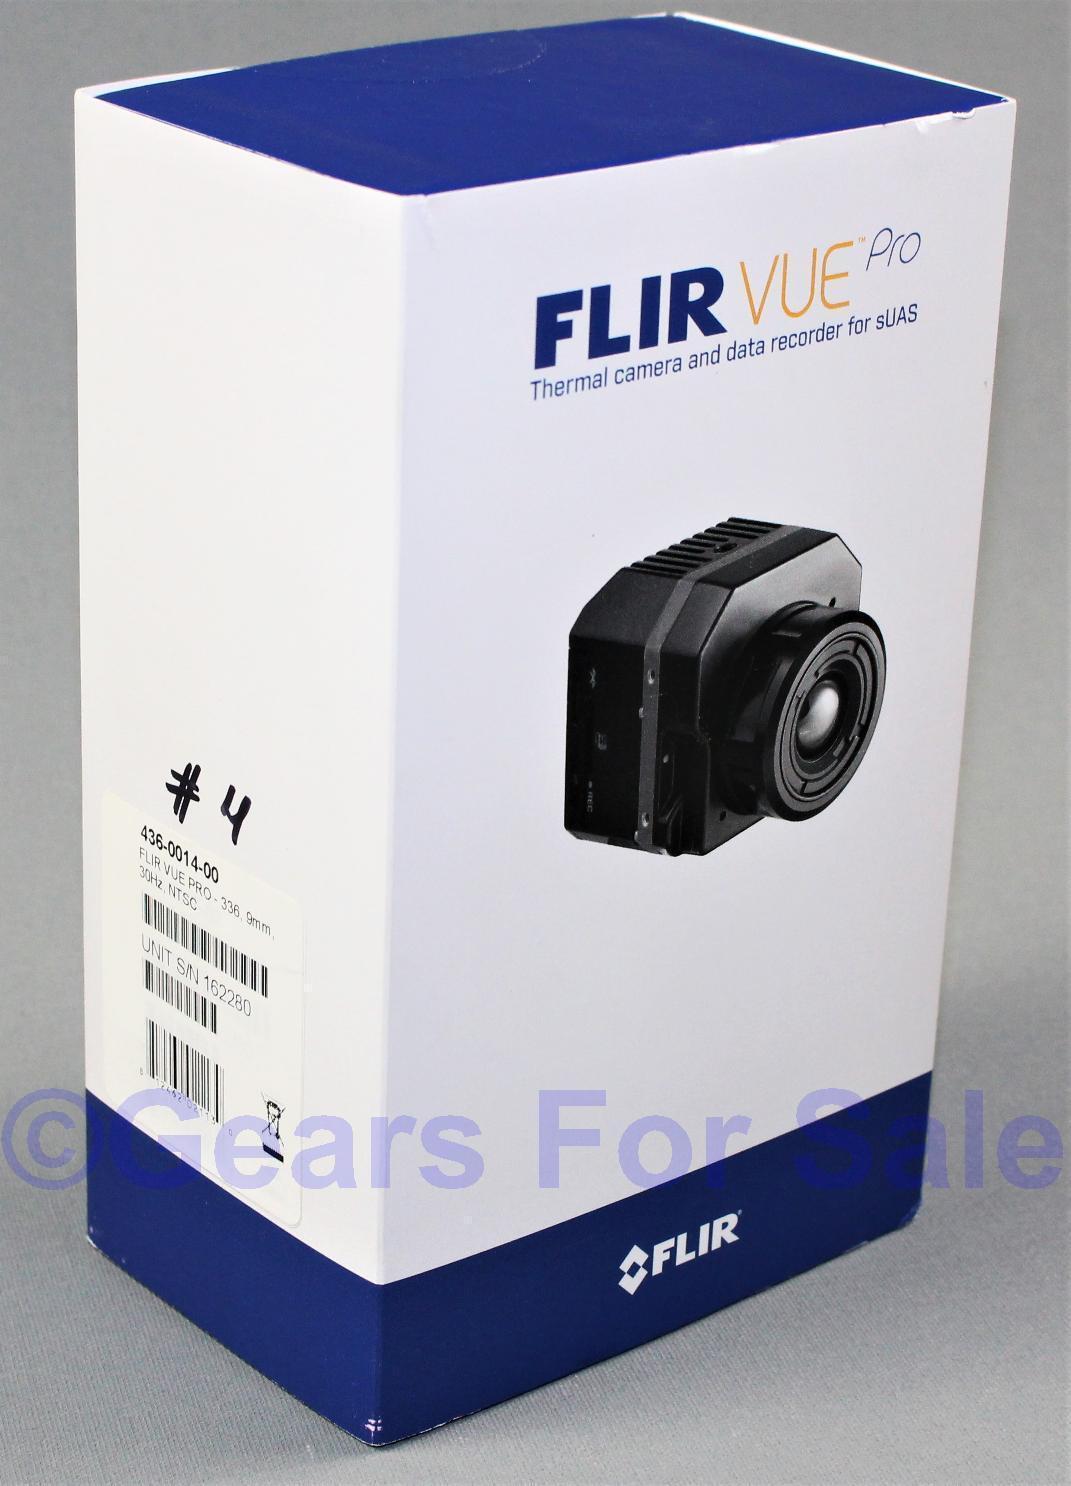 FLIR 436-0014-00 Vue Pro Thermal Camera for sUAS